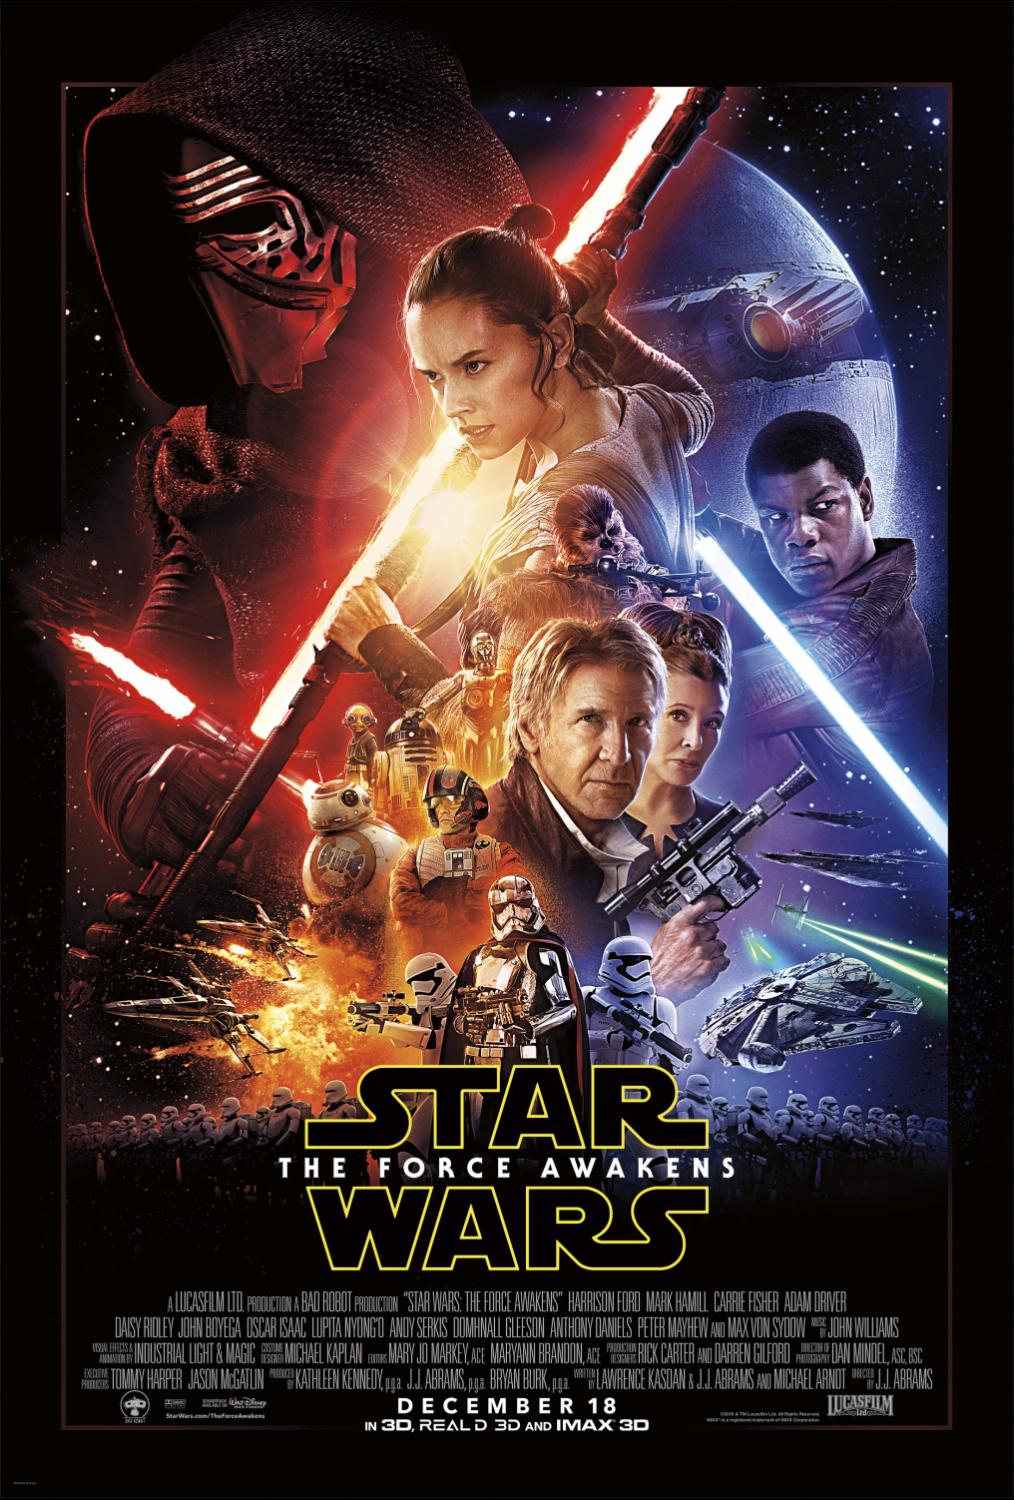 Star Wars Princess Leia, Star Wars spoilers, Star Wars The Force Awakens